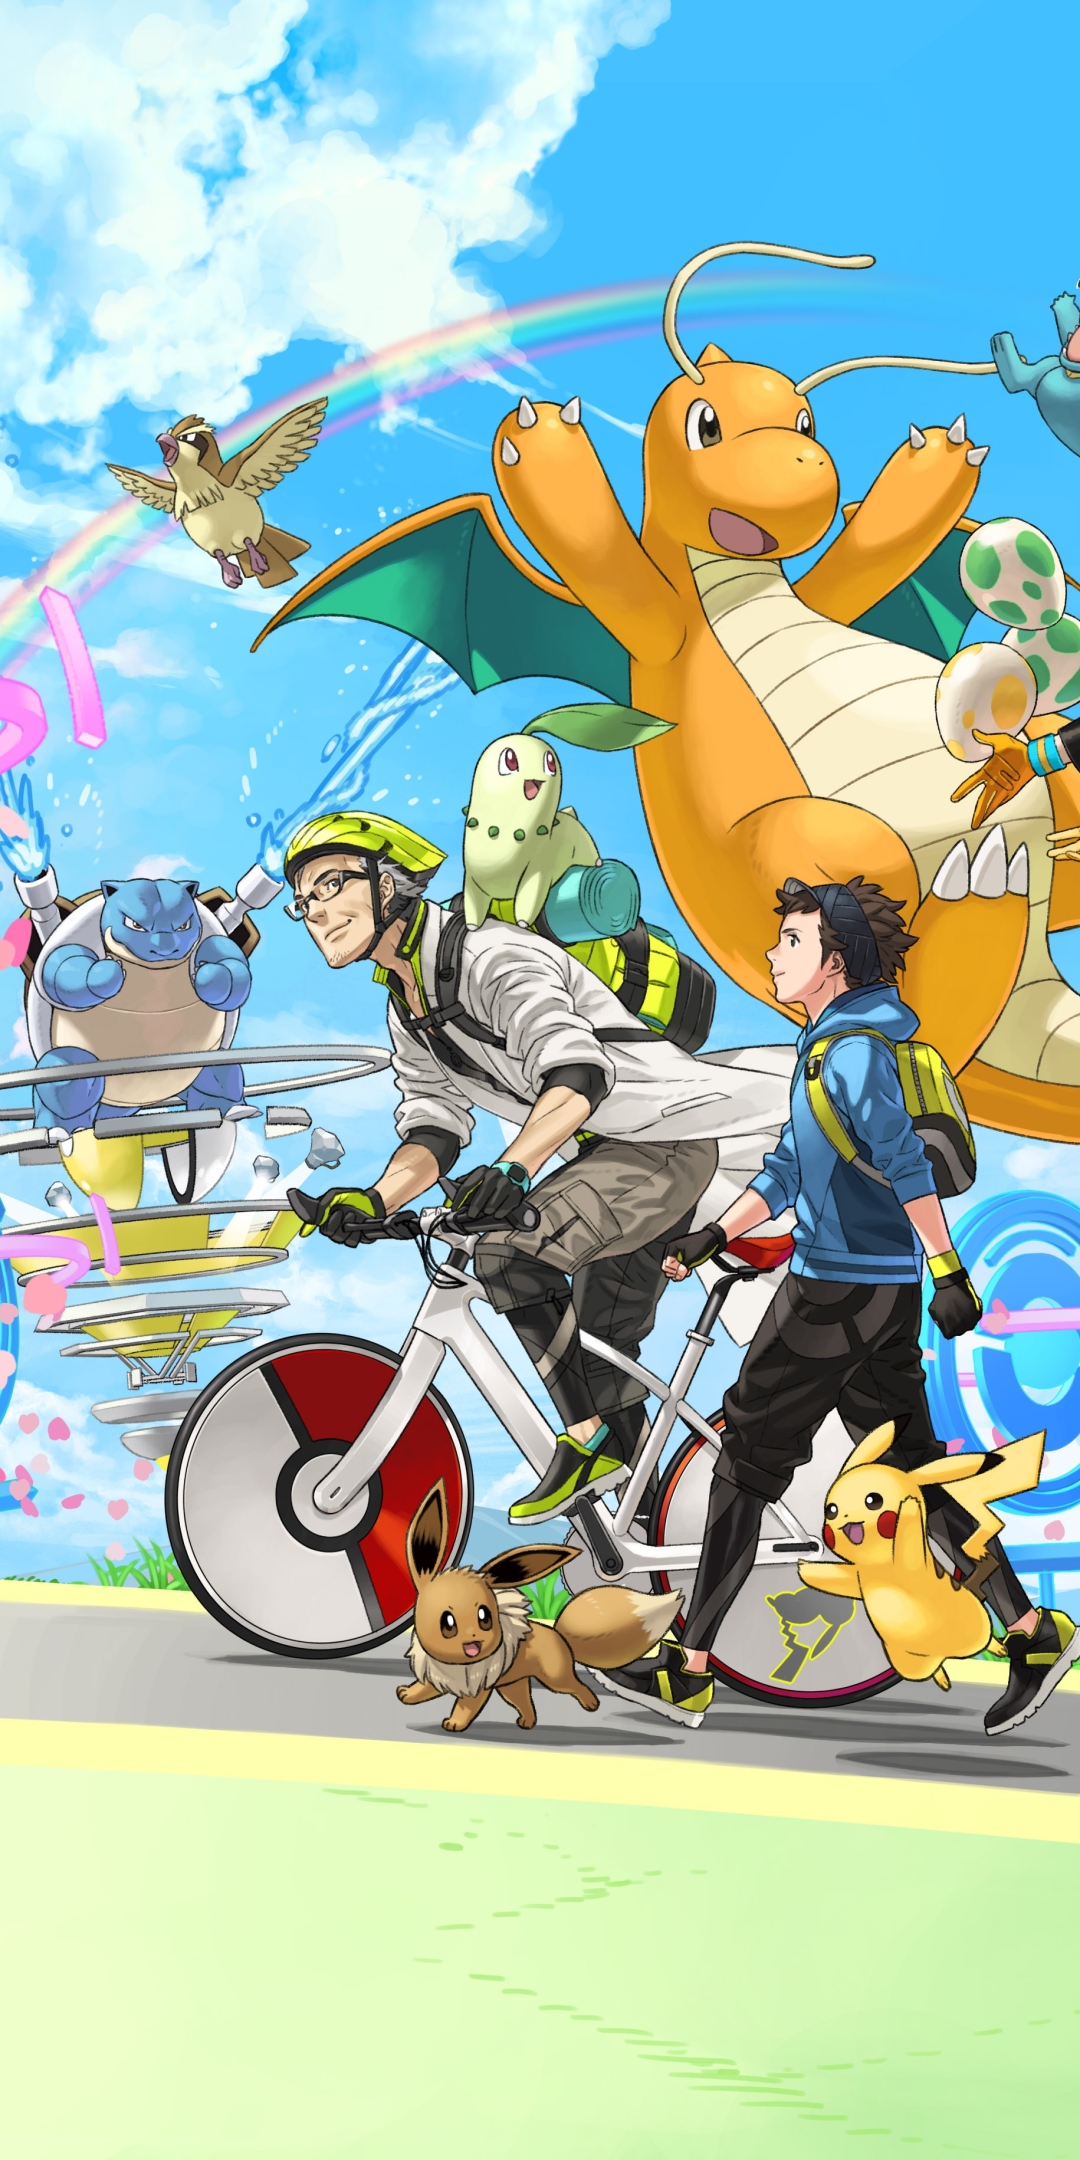 Descarga gratuita de fondo de pantalla para móvil de Pokémon, Pikachu, Videojuego, Dragonite (Pokémon), Blastoise (Pokémon), Pokémon Go, Pokémon Ir.